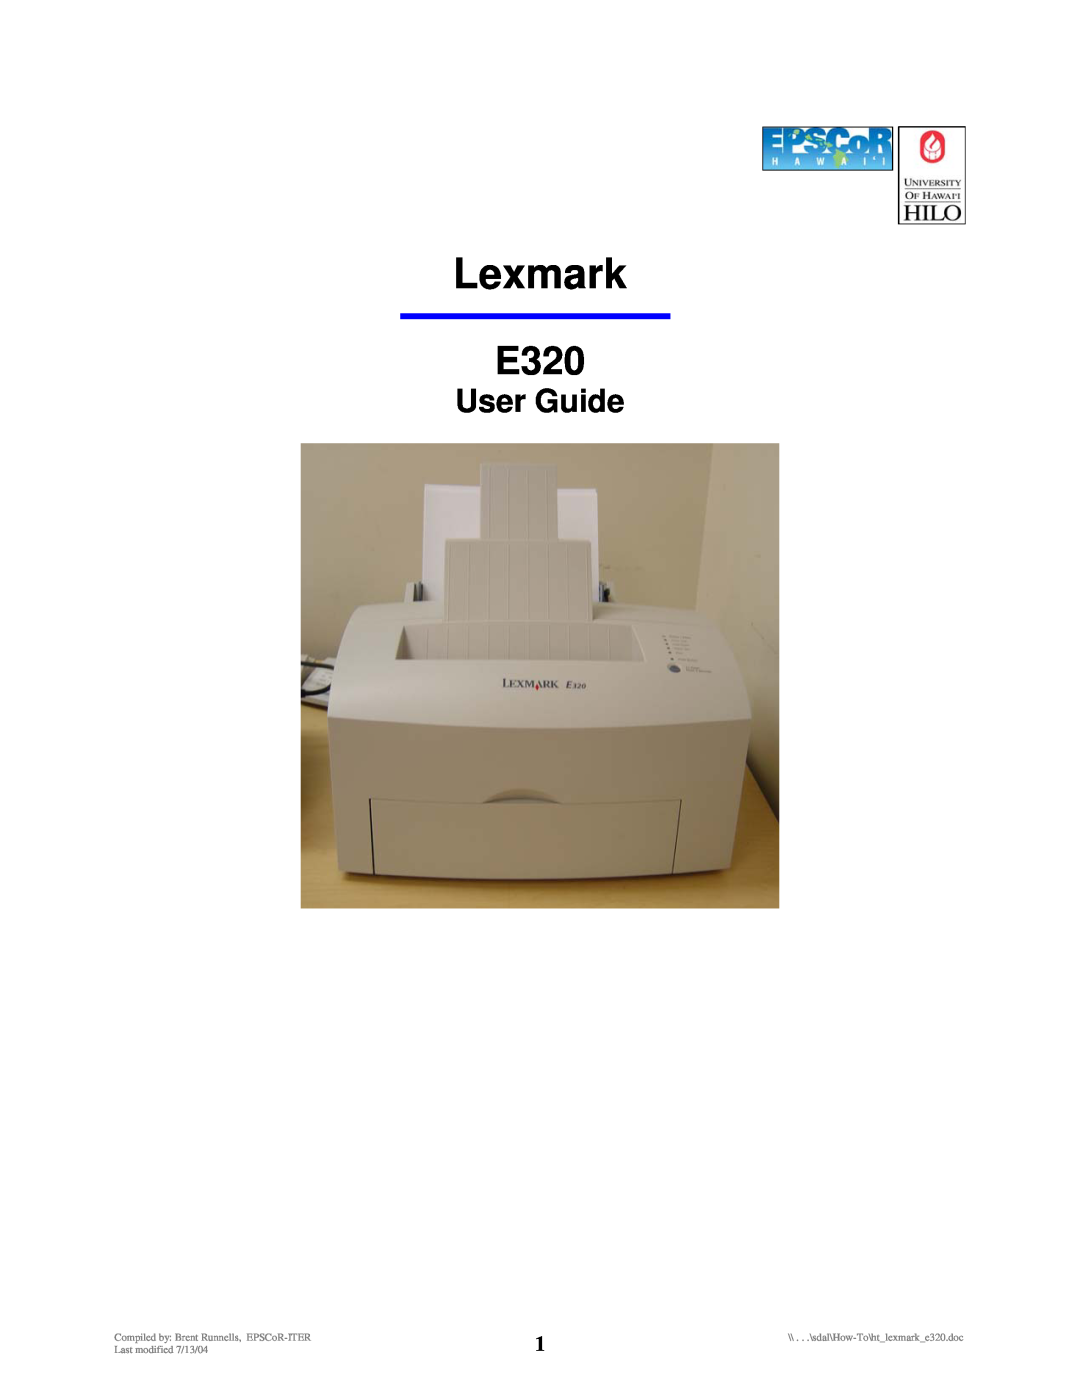 Lexmark E322 manual Choosing the right print media, Printing, Paper handling, Maintenance, Troubleshooting, Administration 